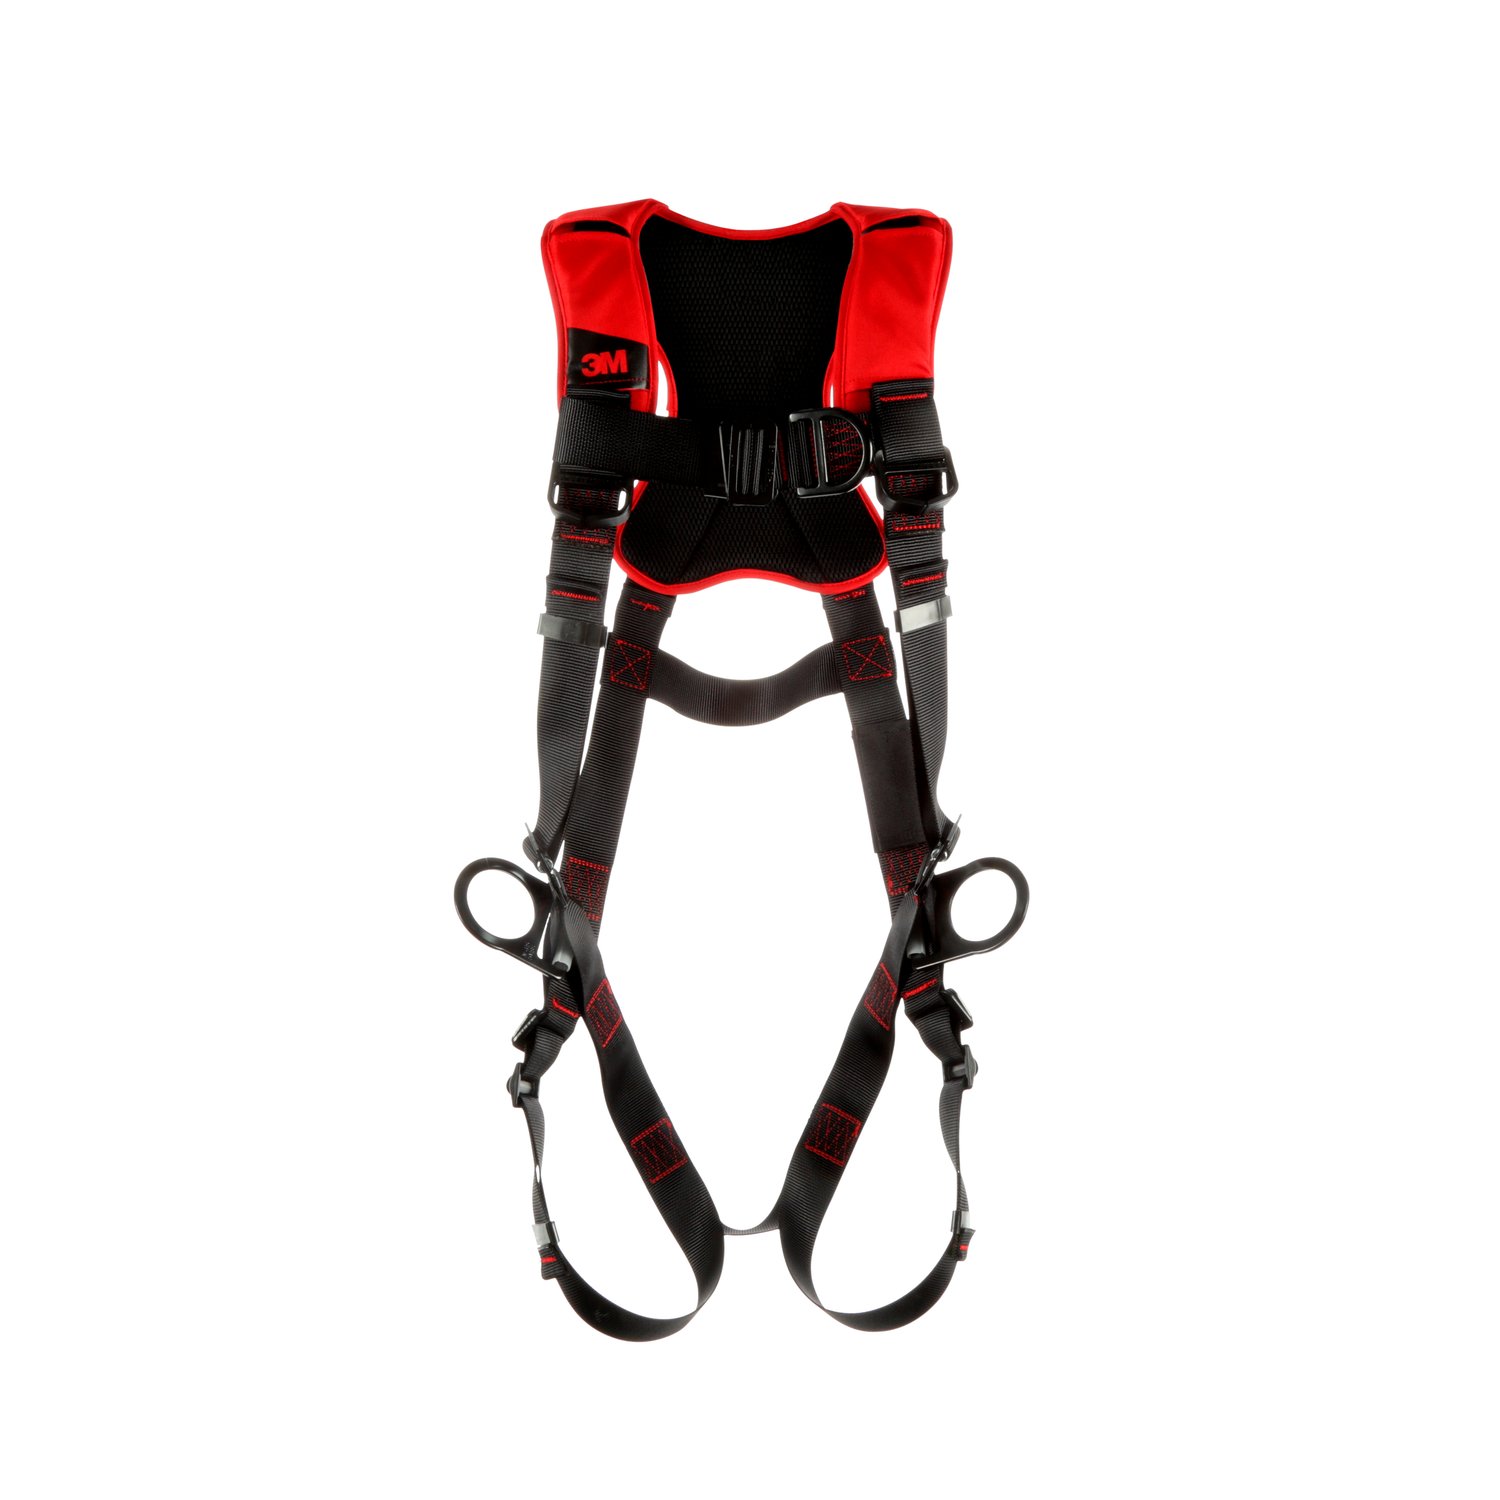 7012816718 - 3M Protecta P200 Comfort Vest Climbing/Positioning Safety Harness 1161437, Medium/Large